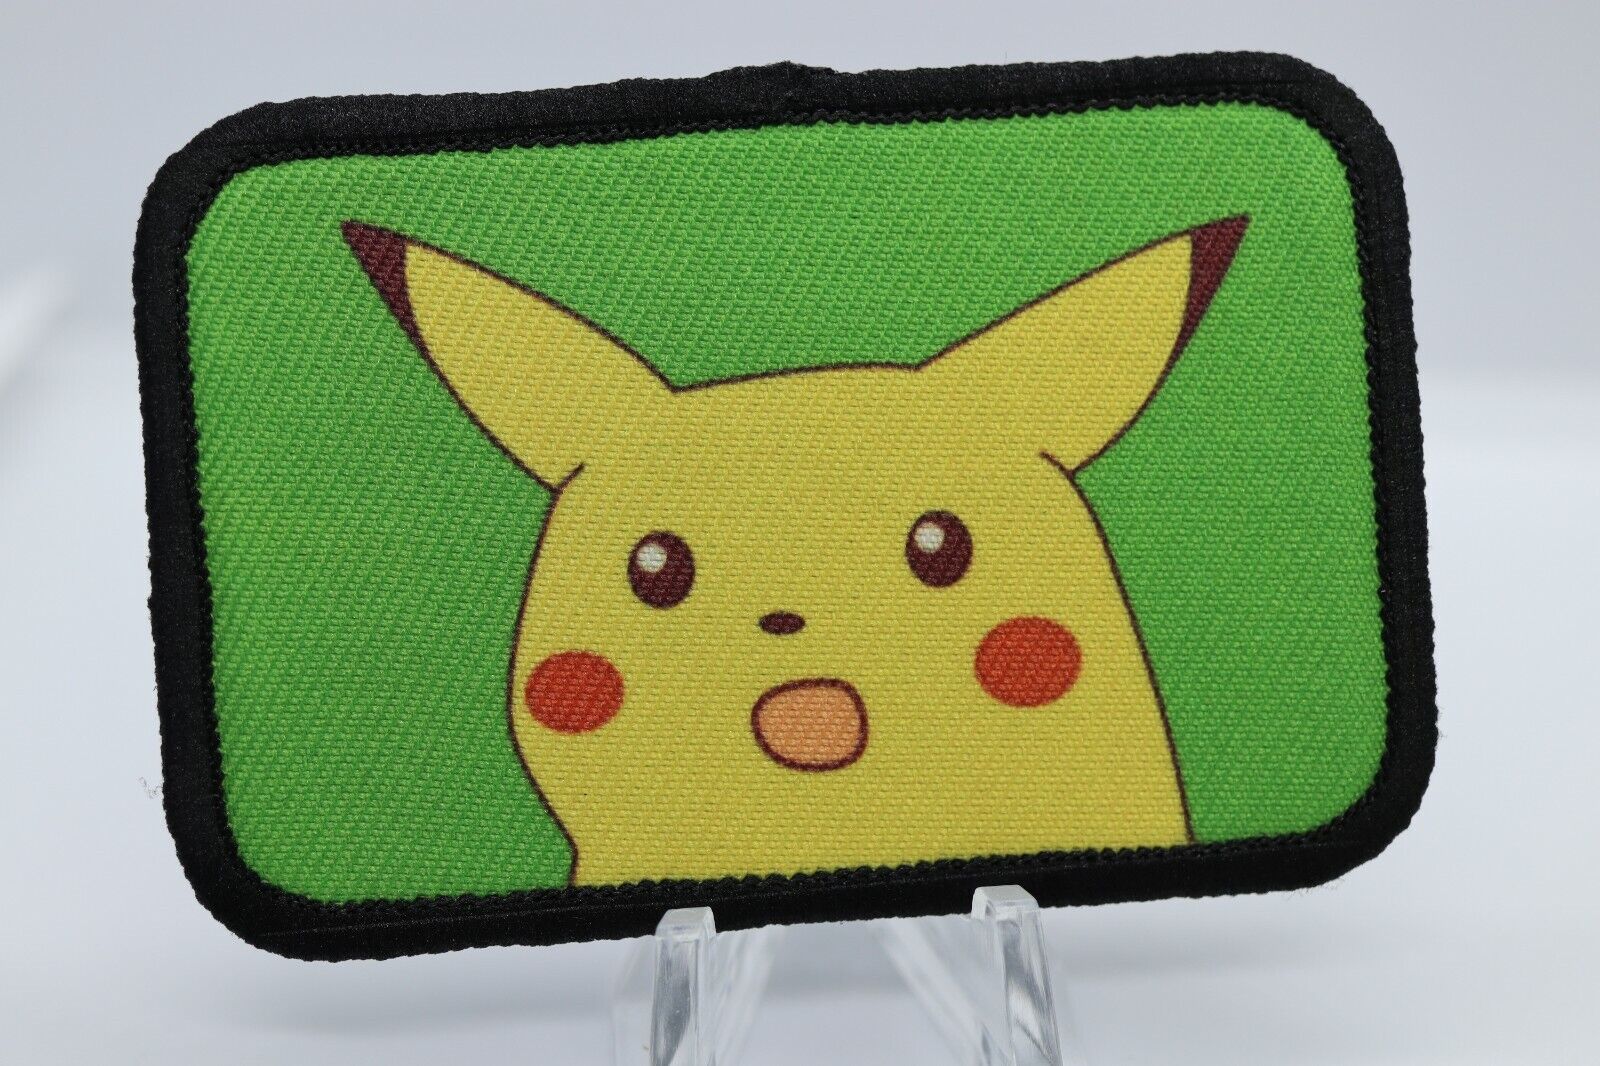 morale patch surprised Pikachu meme Green Background 2